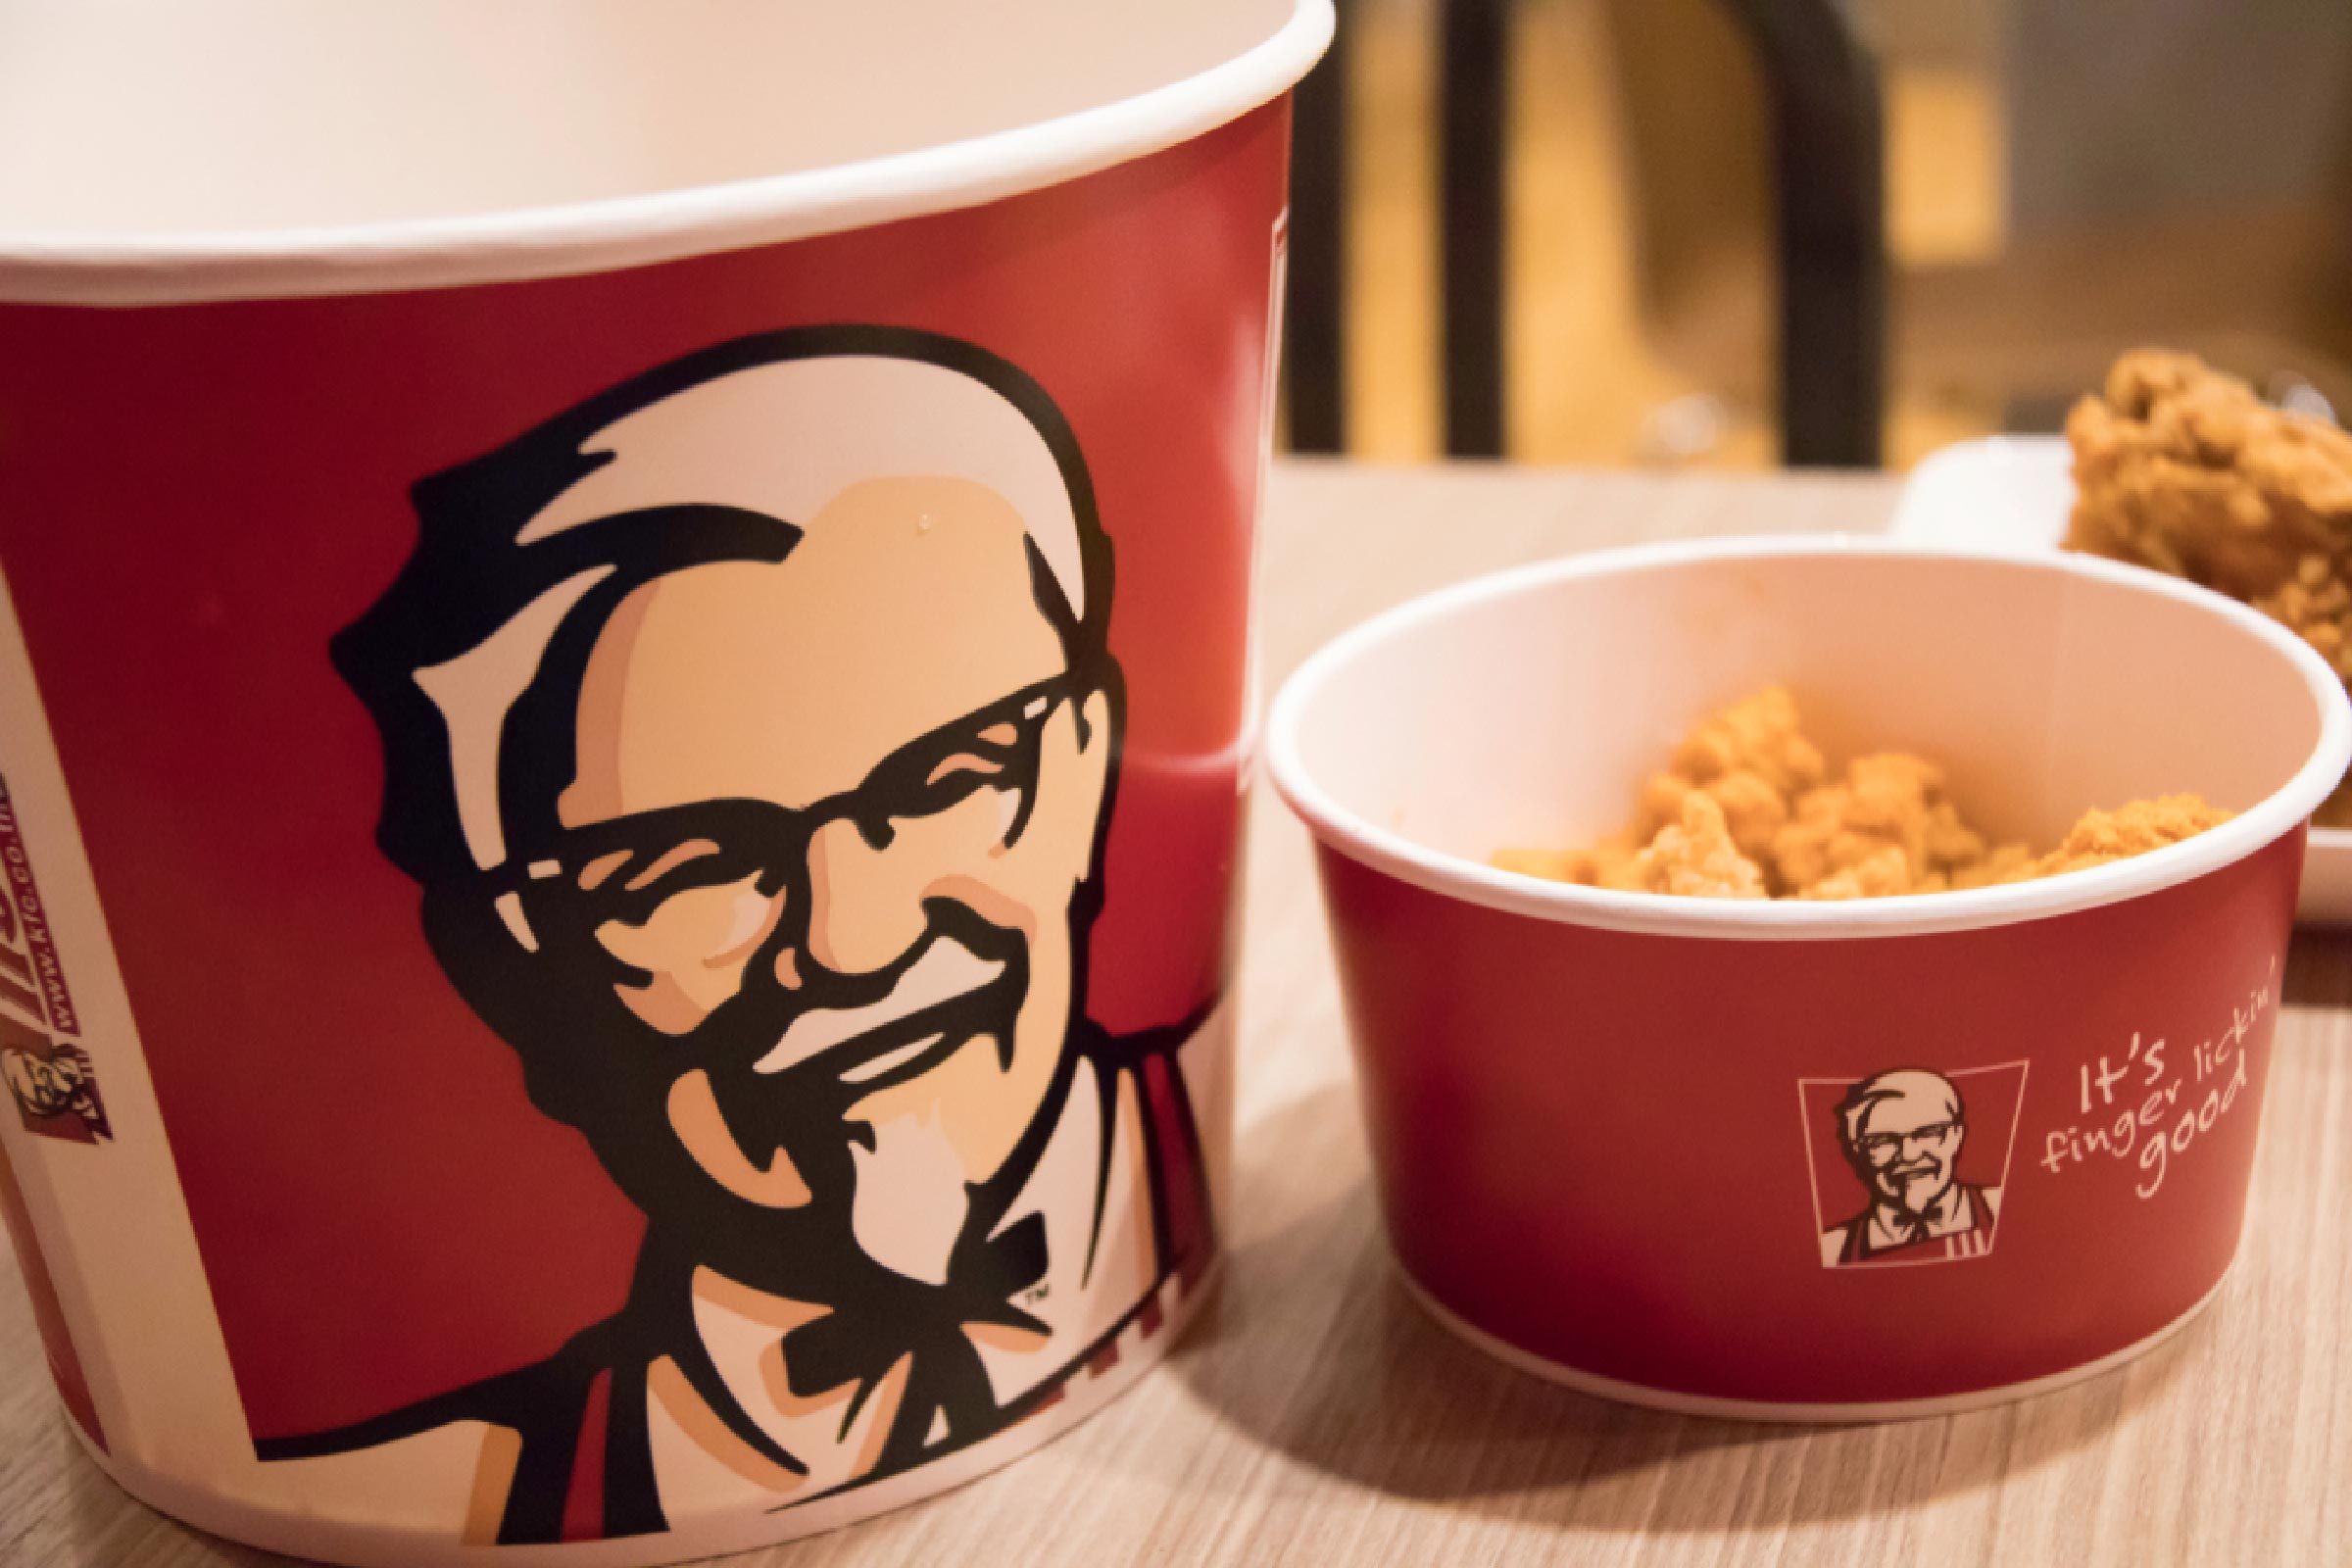 KFC, Boston Market add chicken nuggets a year after Popeyes